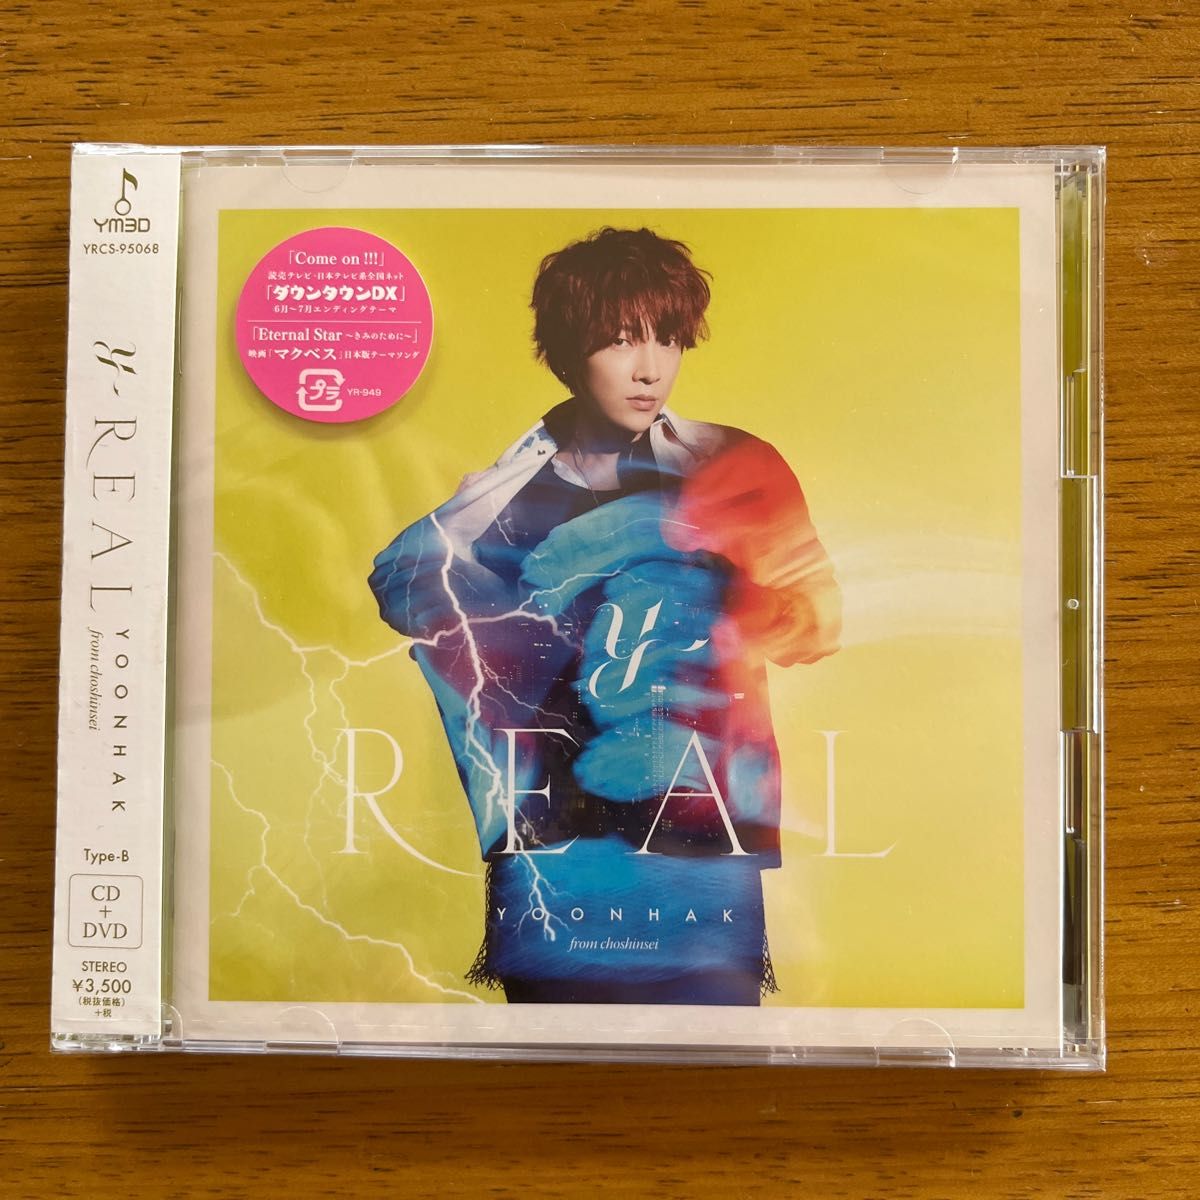 Type-B ユナク from 超新星 CD+DVD/REAL 16/6/29発売 オリコン加盟店